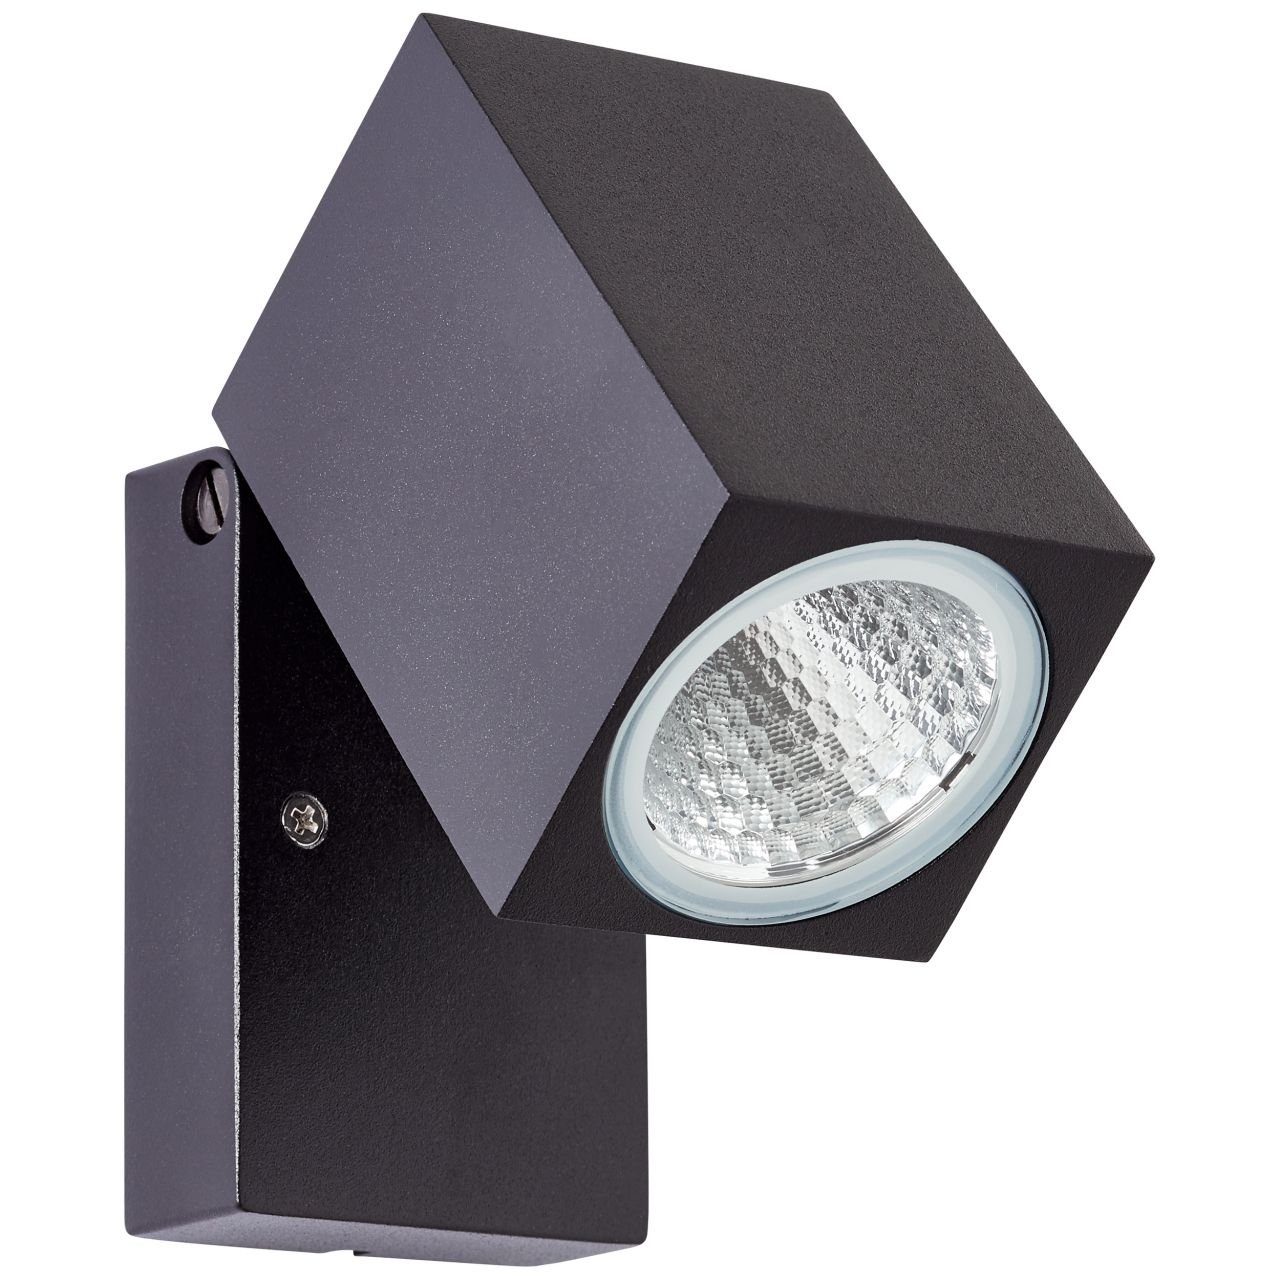 Burk, Burk LED Außen-Wandleuchte integri integriert, LED LED 1x Brilliant LED 6W Außenwandstrahler schwarz